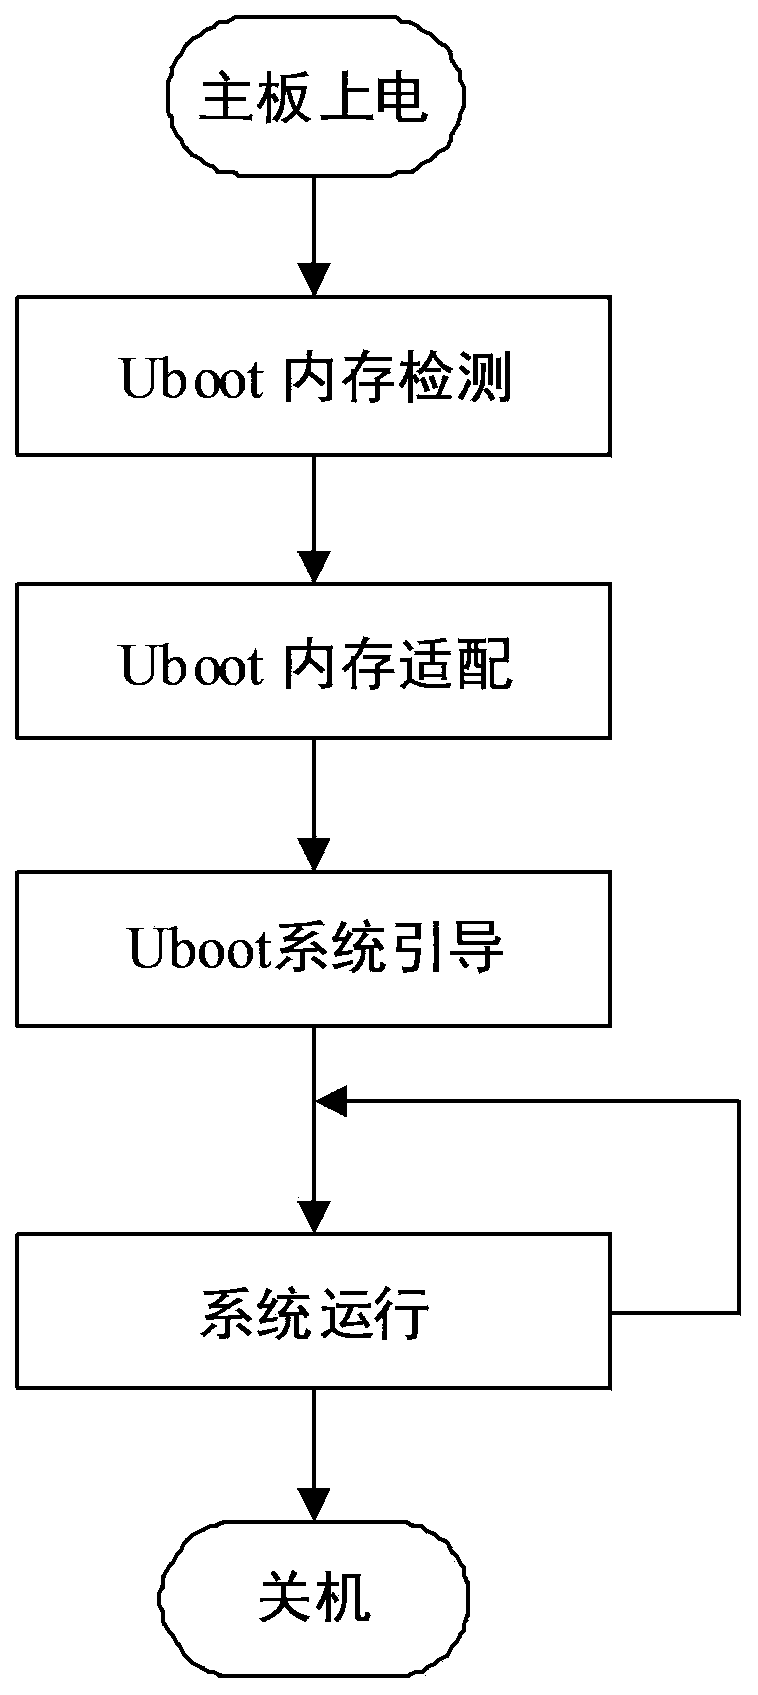 A memory self-adaptation method based on uboot